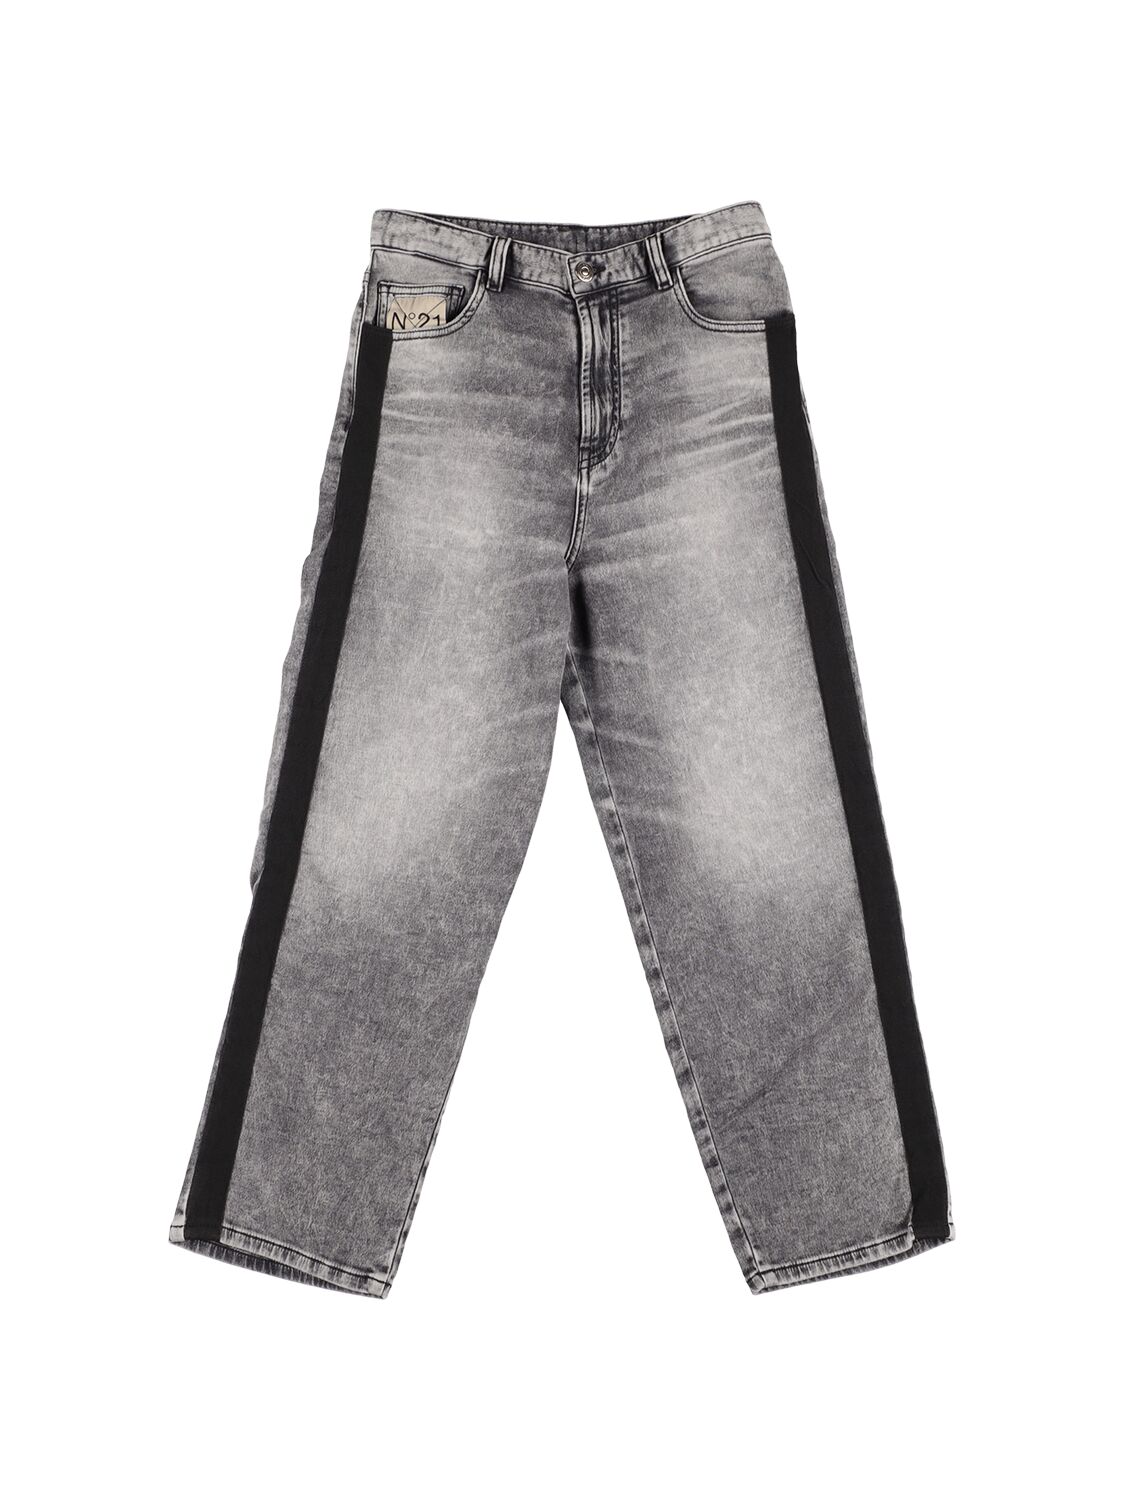 Image of Cotton Denim Jeans W/ Side Bands